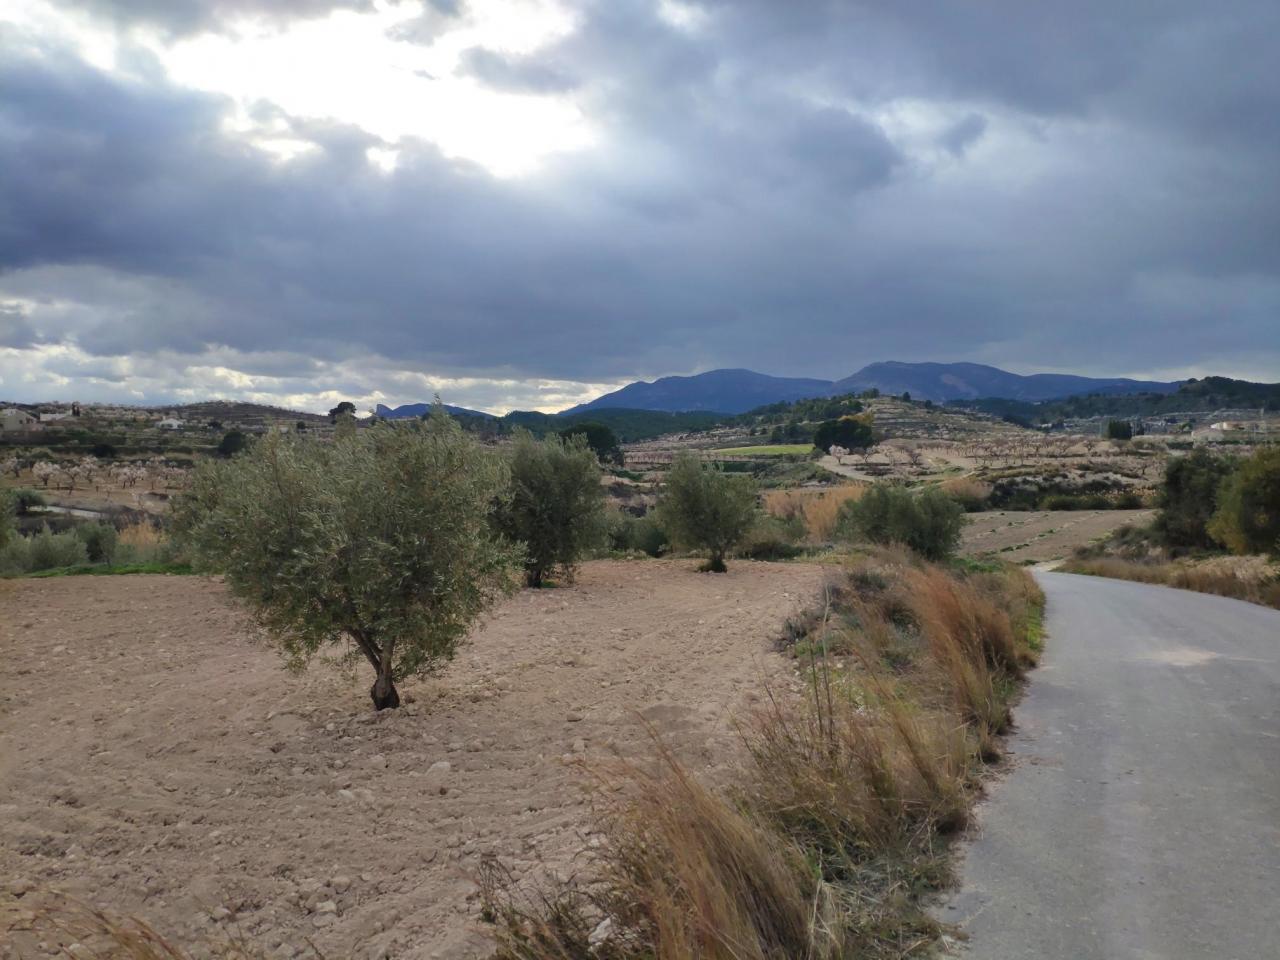  Tierra oliveras Olleras